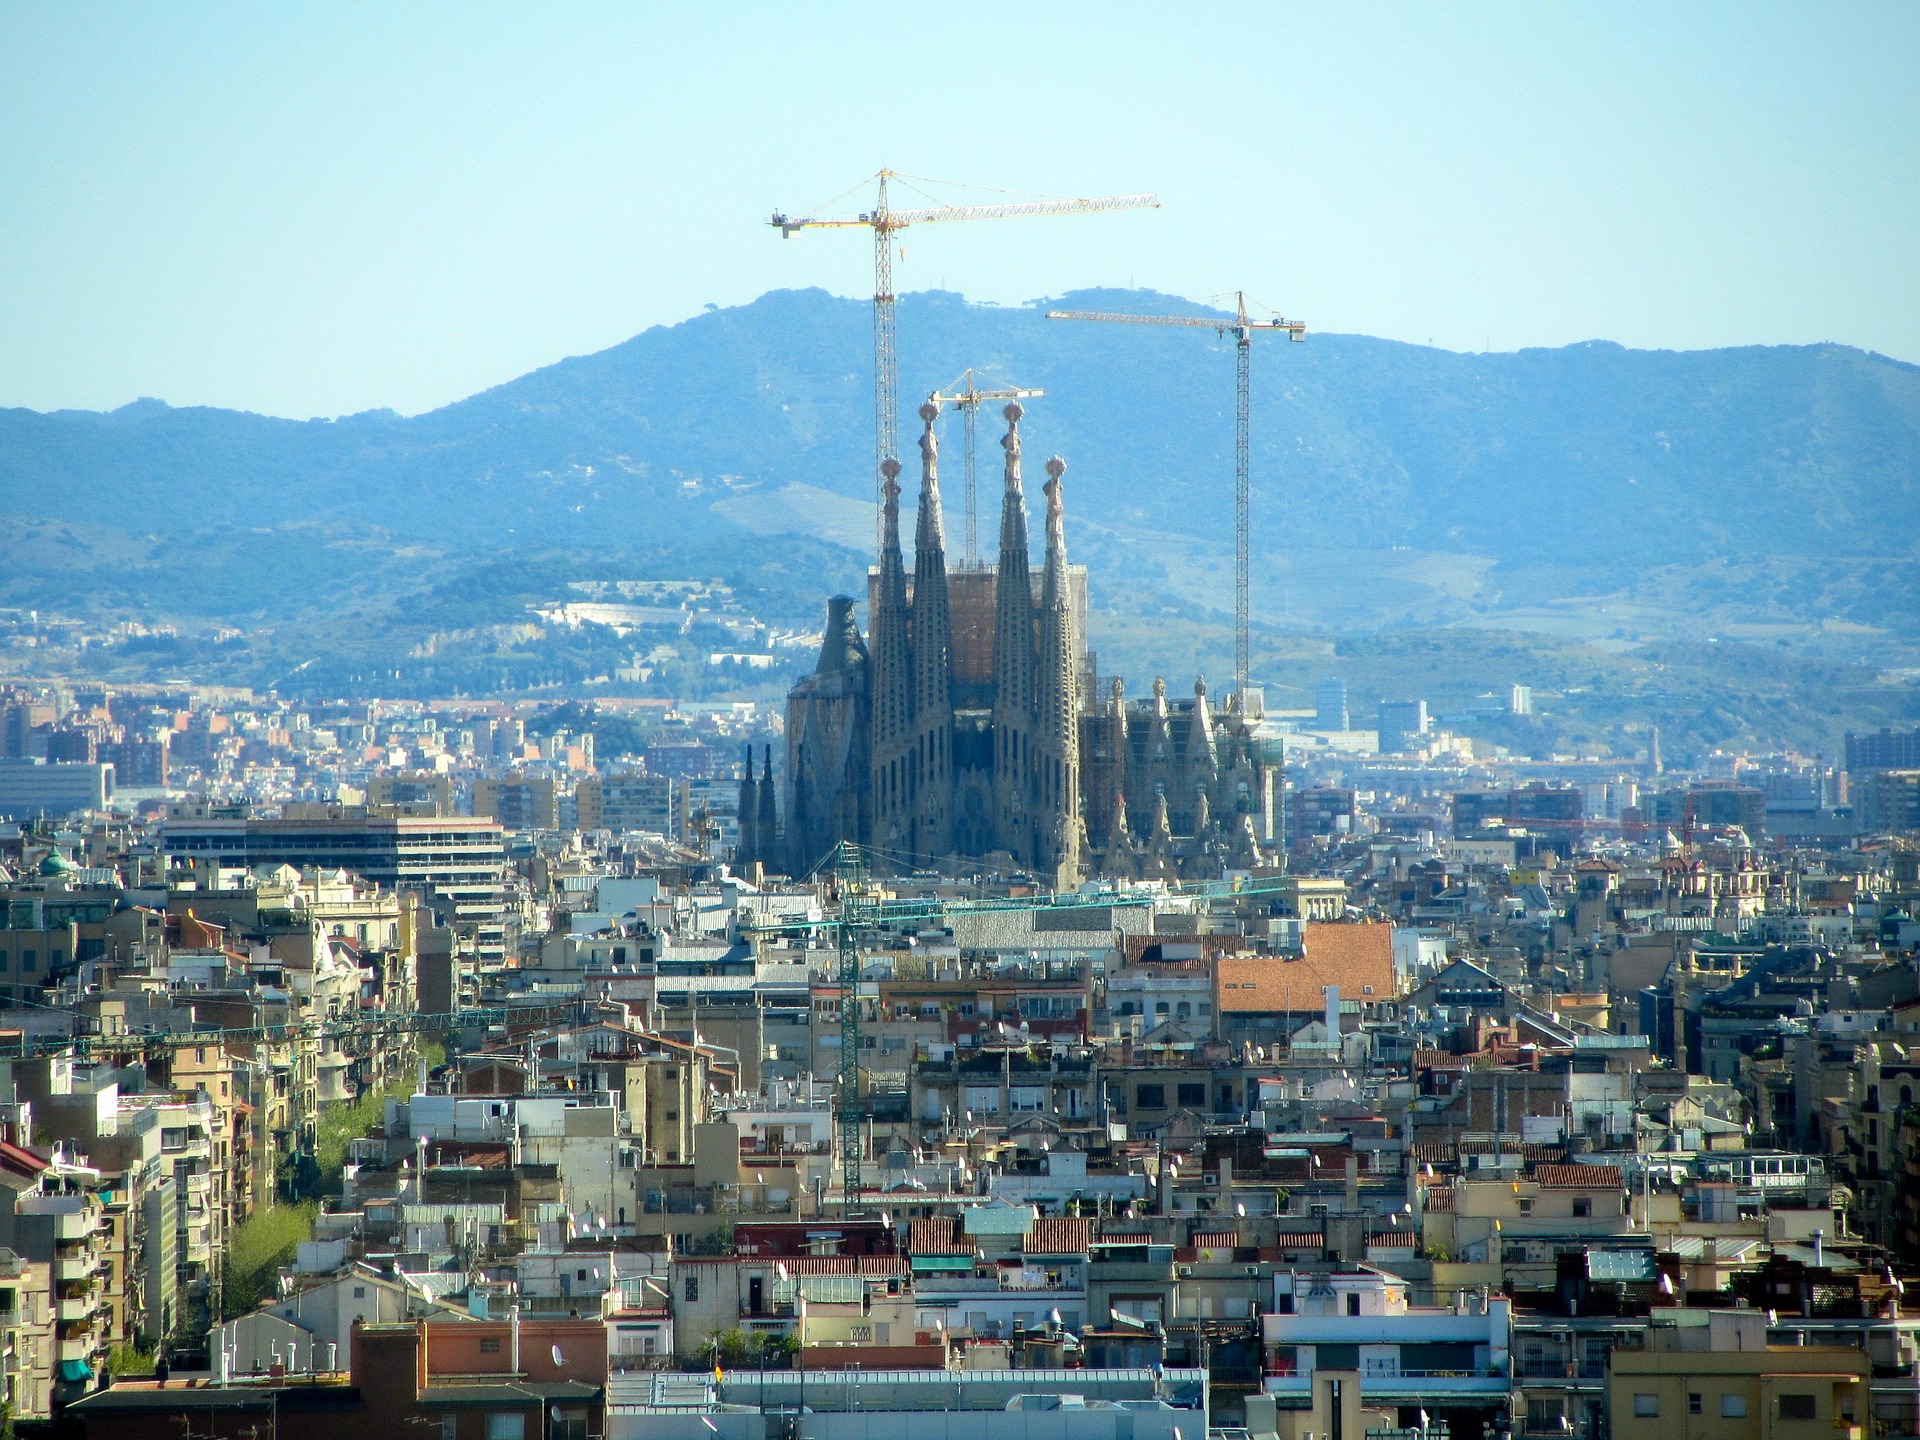 Picture of the Sagrada Familia